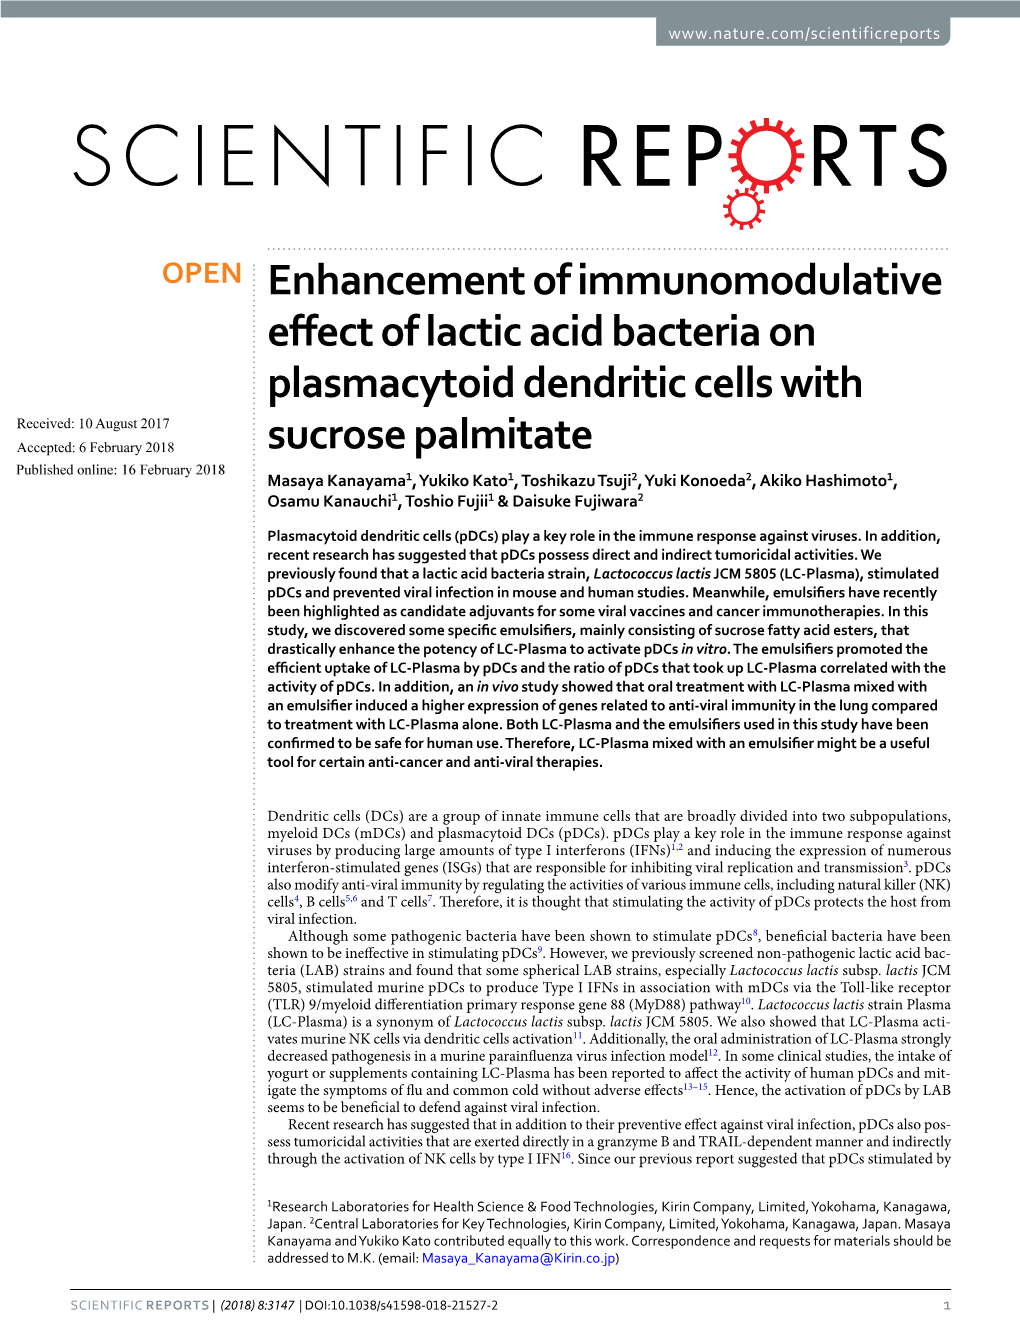 Enhancement of Immunomodulative Effect of Lactic Acid Bacteria on Plasmacytoid Dendritic Cells with Sucrose Palmitate